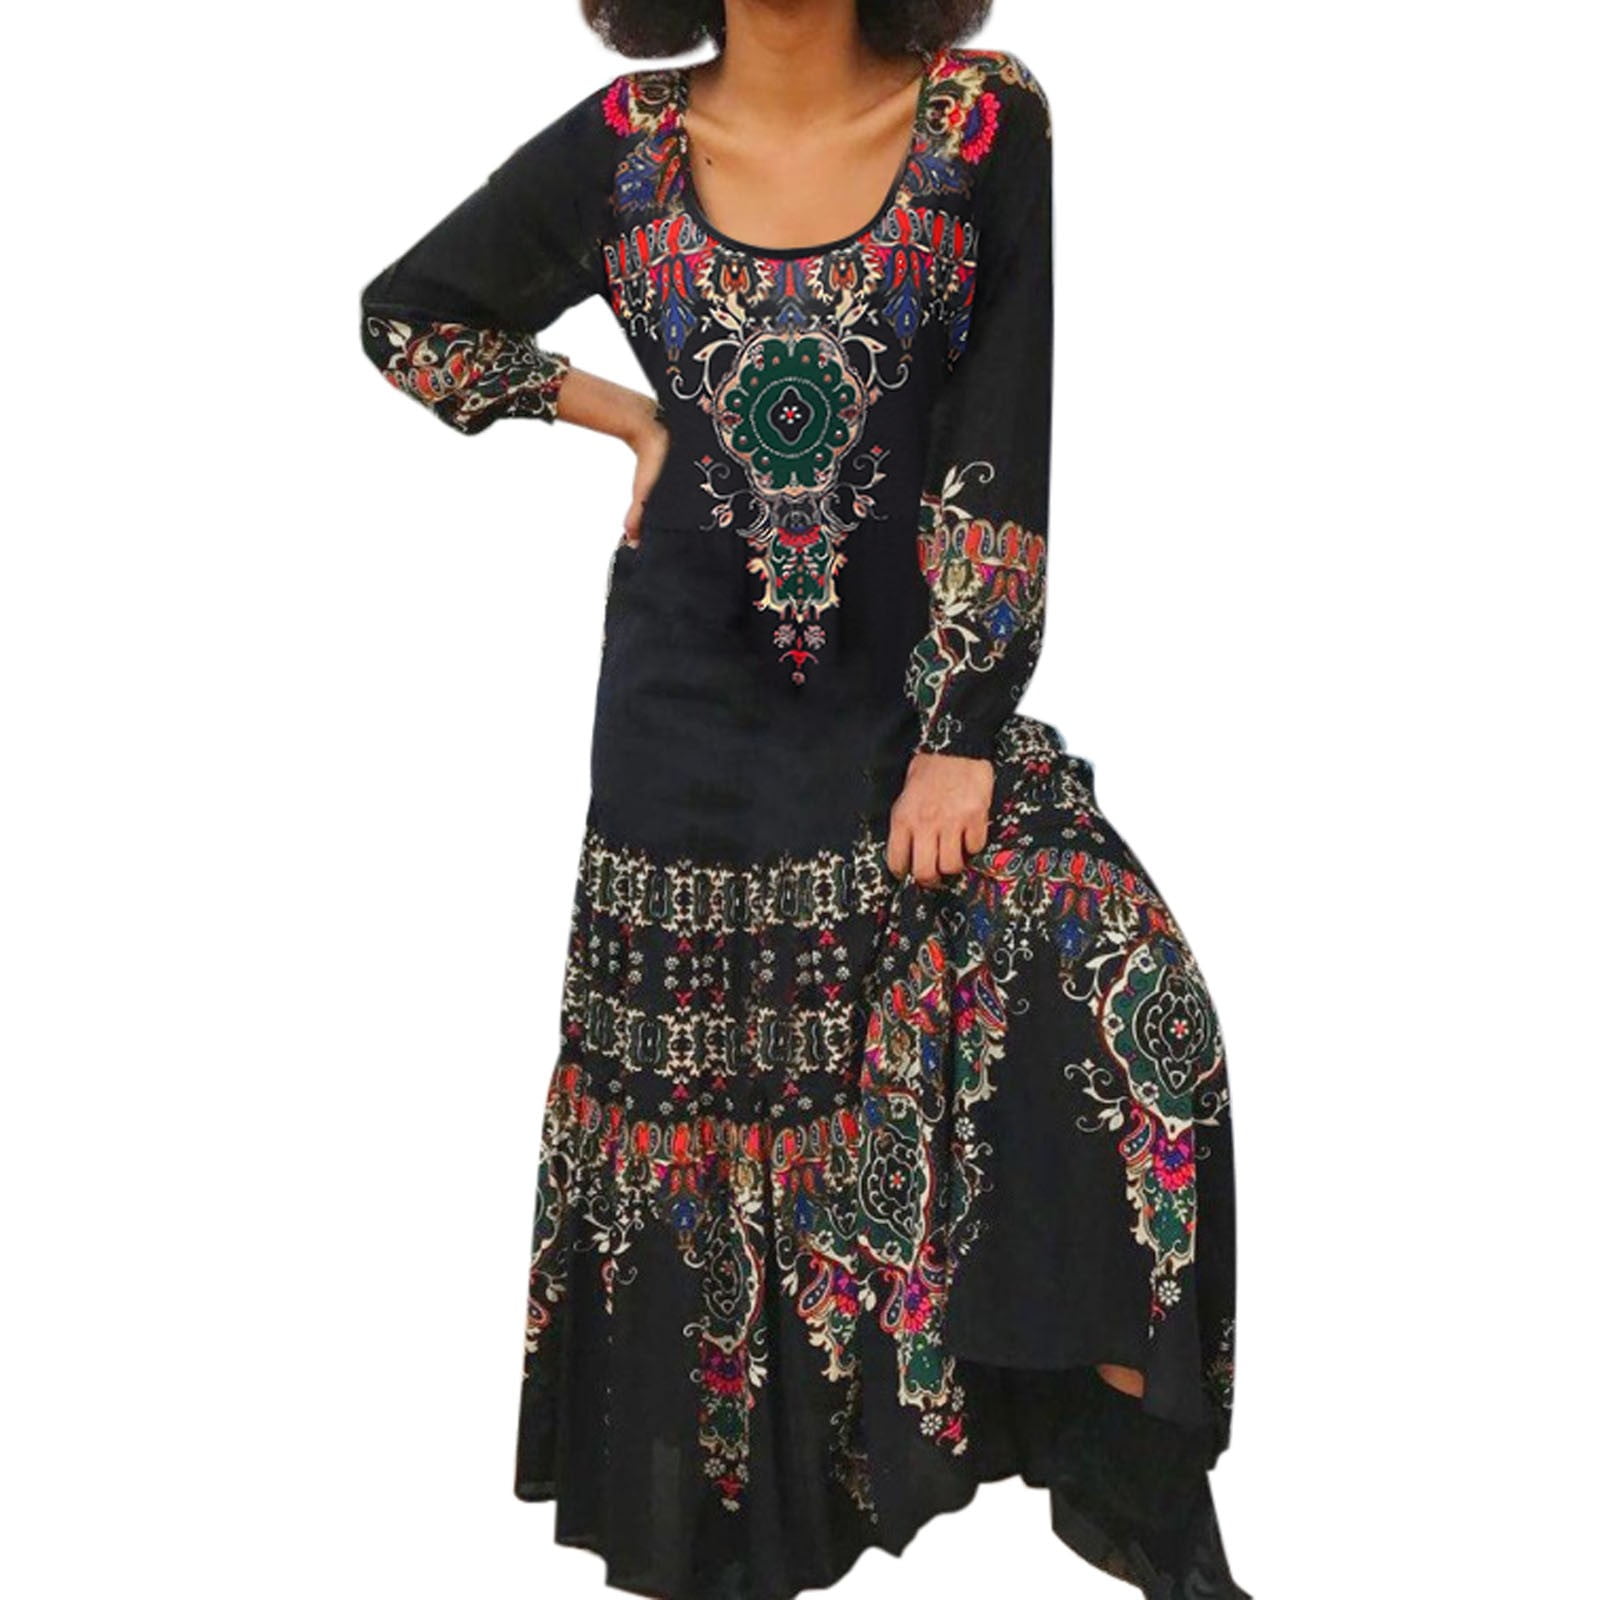 Indus Cotton dress - Buy Designer Ethnic Wear for Women Online in India -  Idaho Clothing